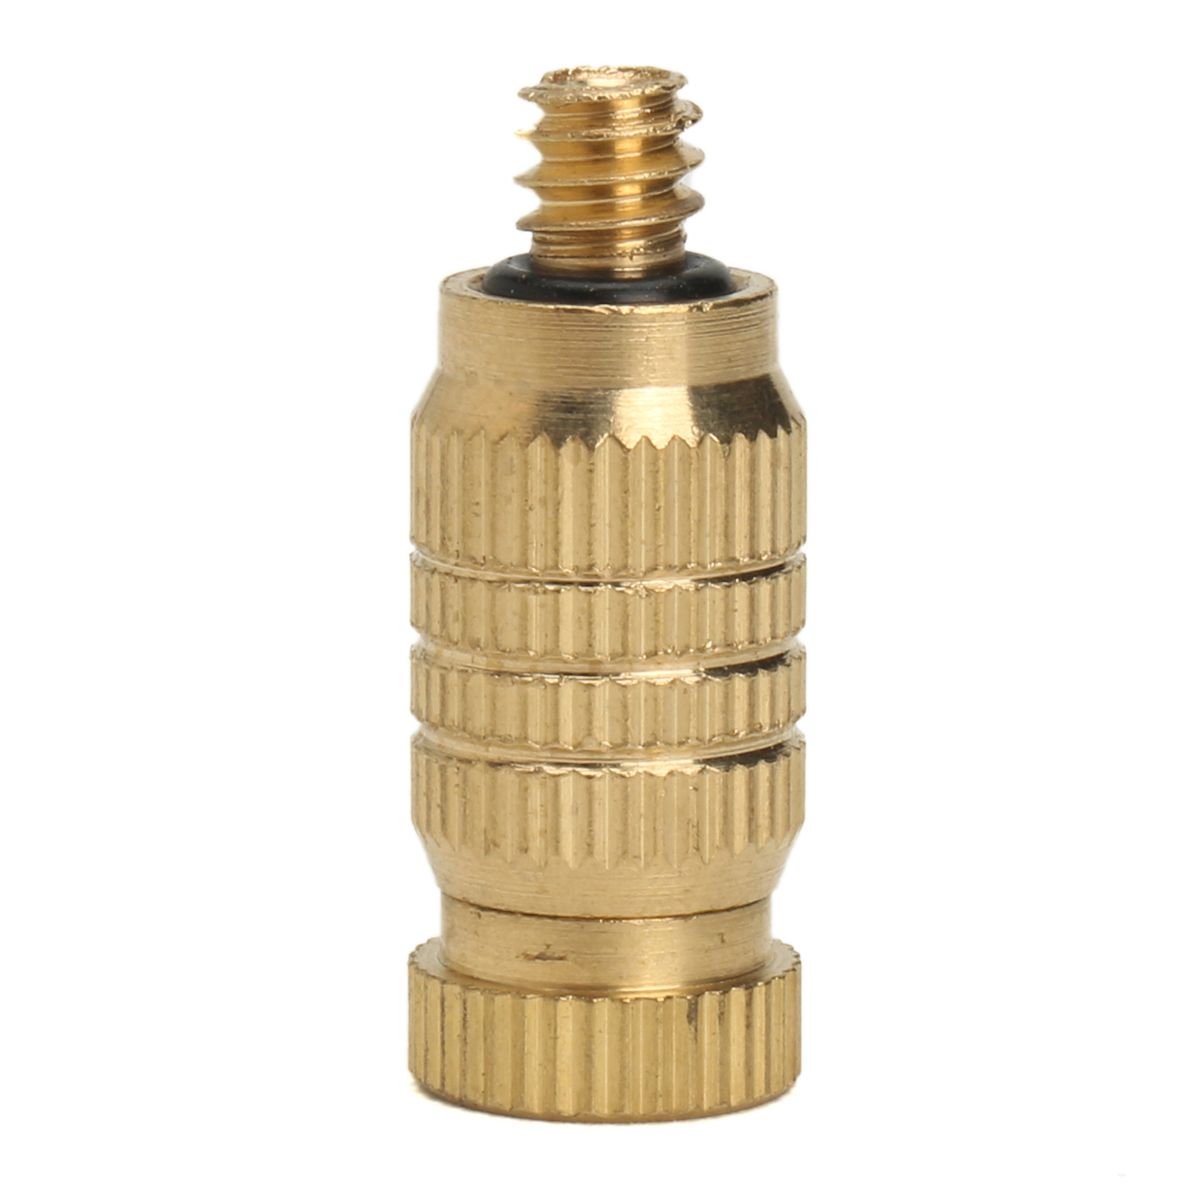 10Pcs-4mm-Male-Threaded-Brass-Misting-Fogging-Nozzle-Spray-Sprinkler-Head-Irrigation-Cooling-1207808